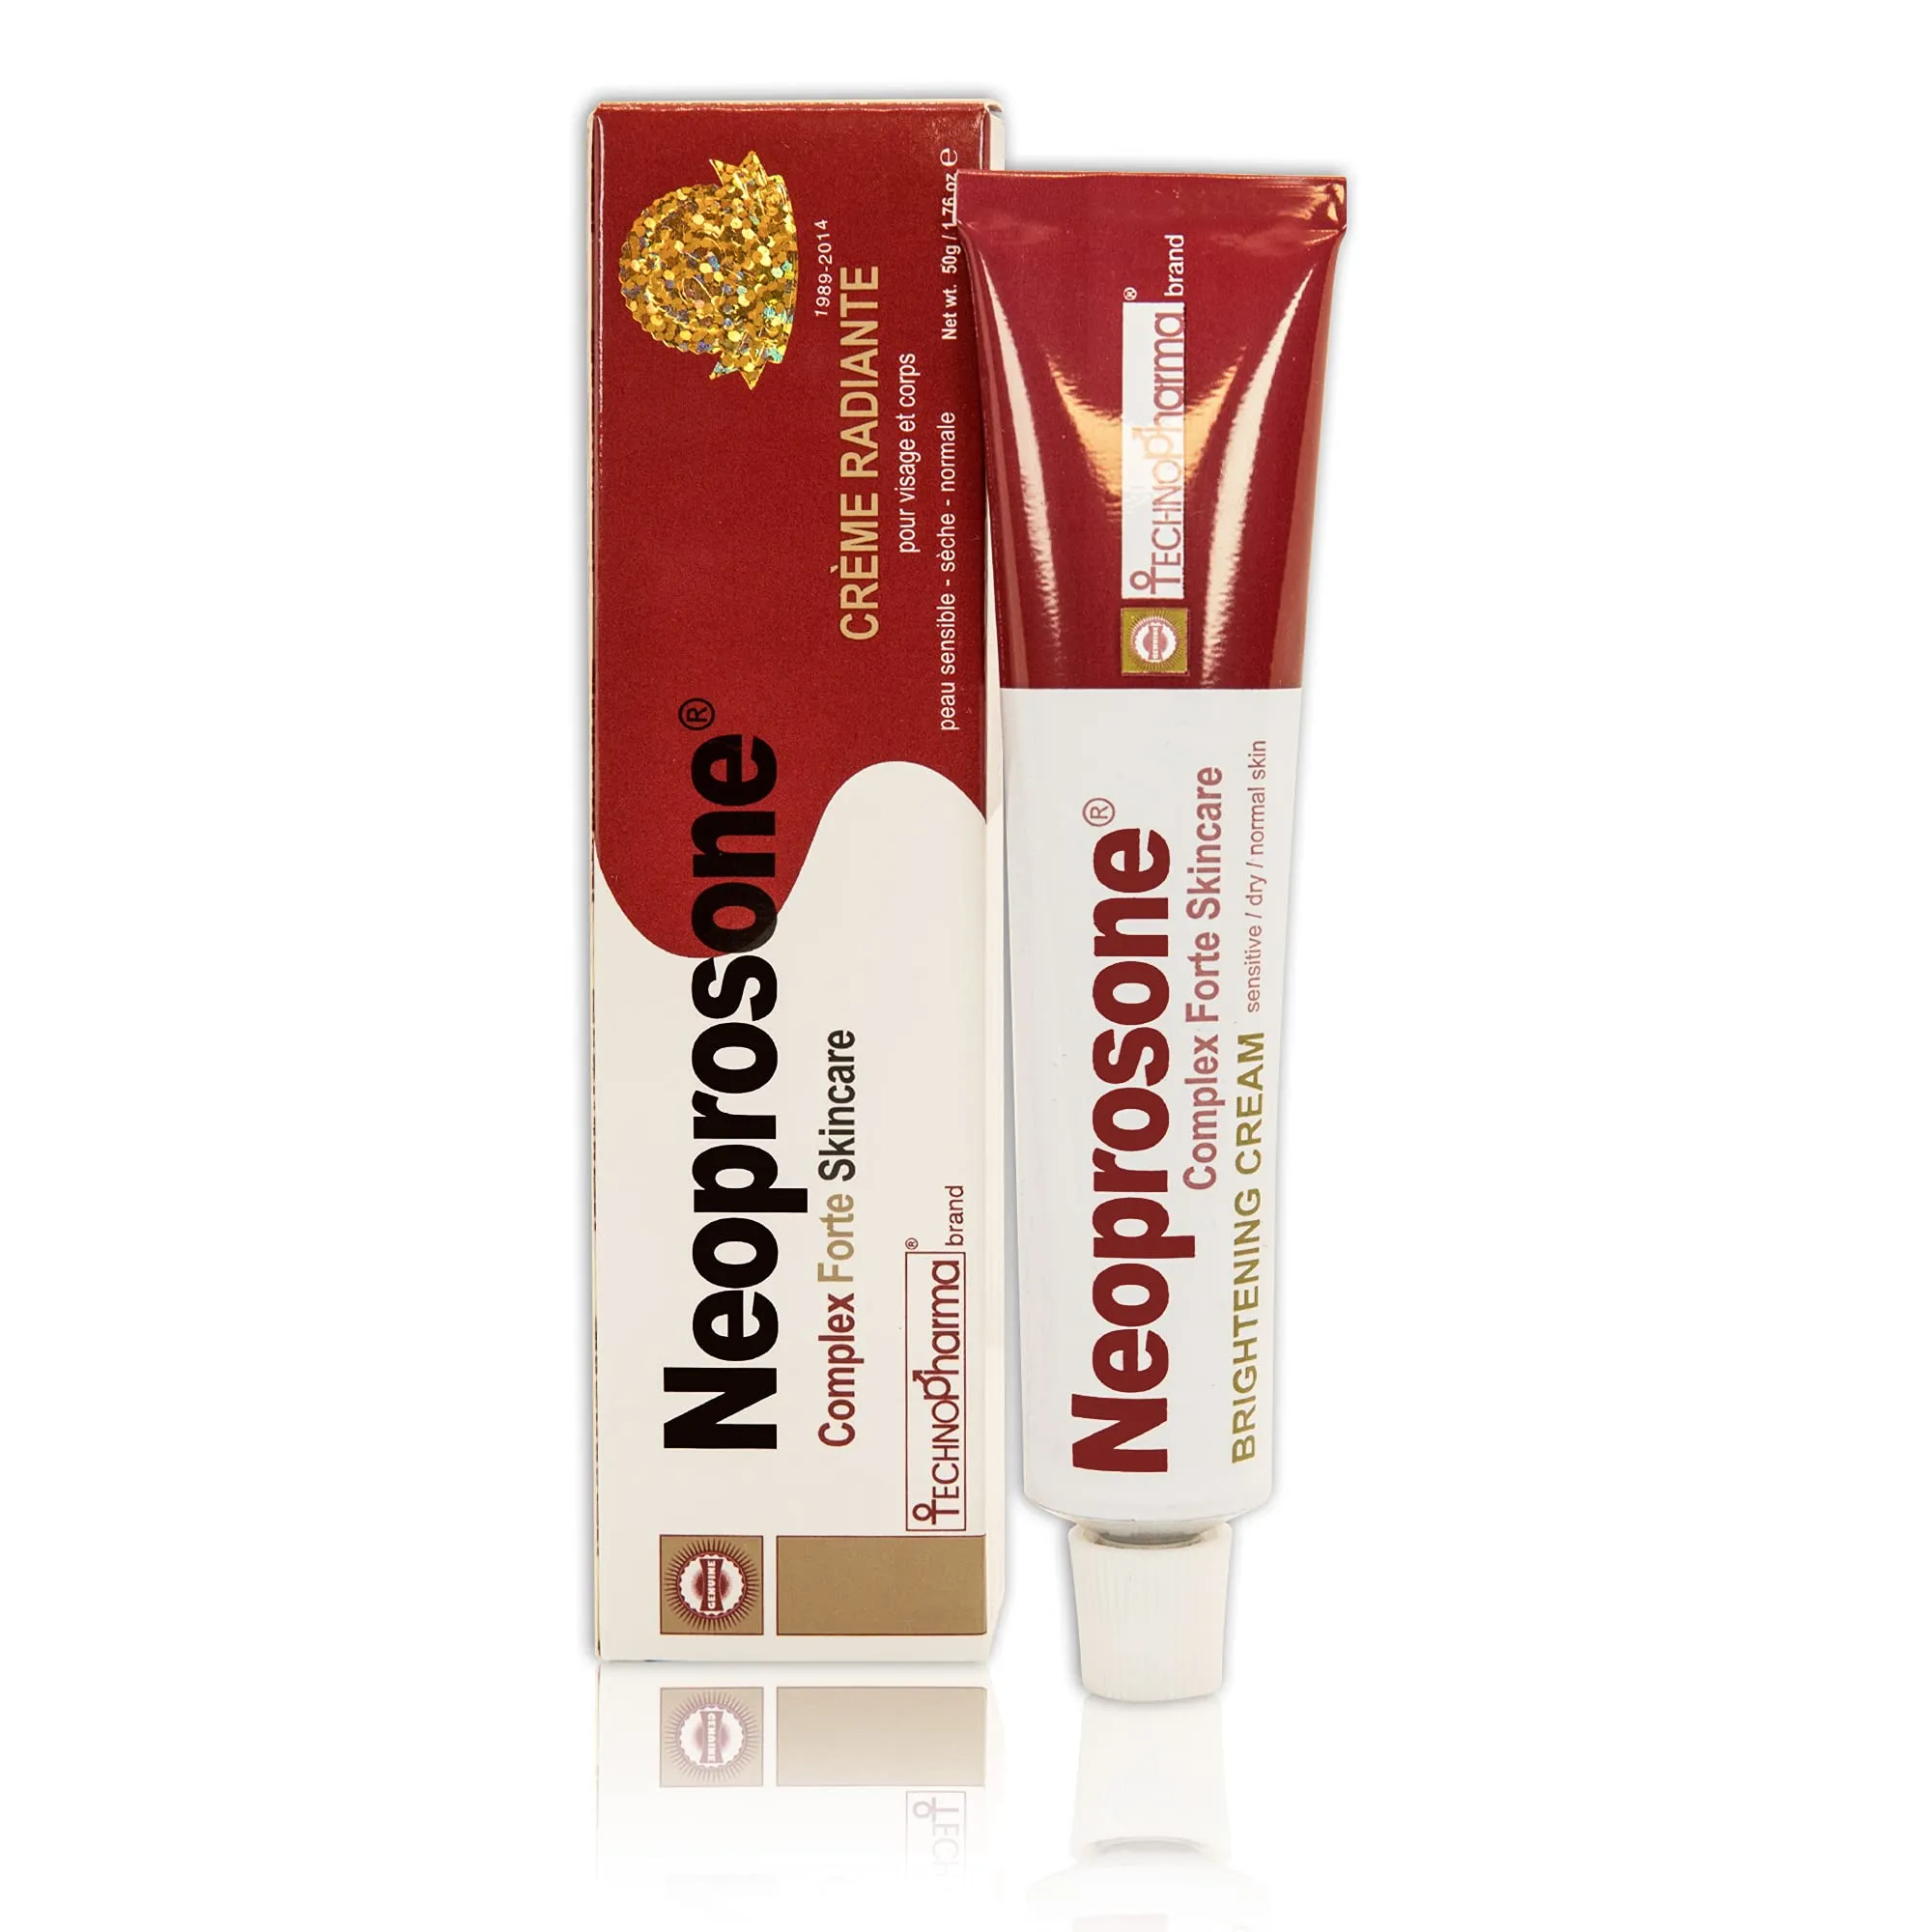 Neoprosone, Skin Brightening Cream | 1.7 Fl oz / 50 ml | Fade Dark Spots on: Face, Elbows, Knees, Body | with Alpha Arbutin, Lactic Acid, Castor Oil